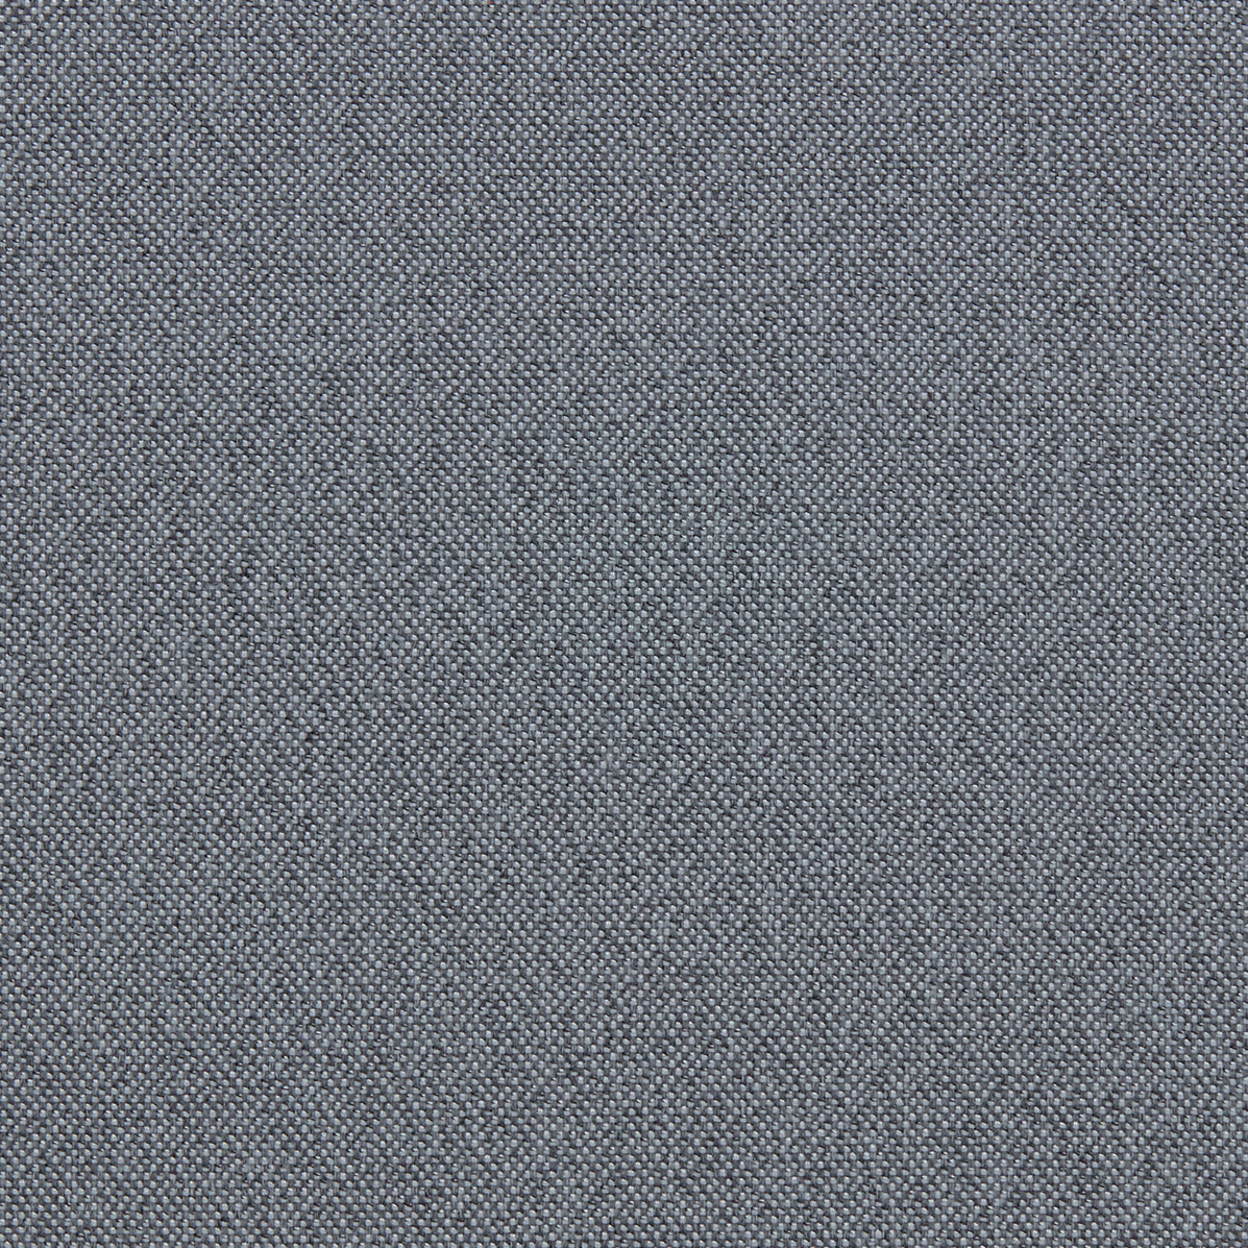 Quill - Meld - Textiles - Materials - Herman Miller